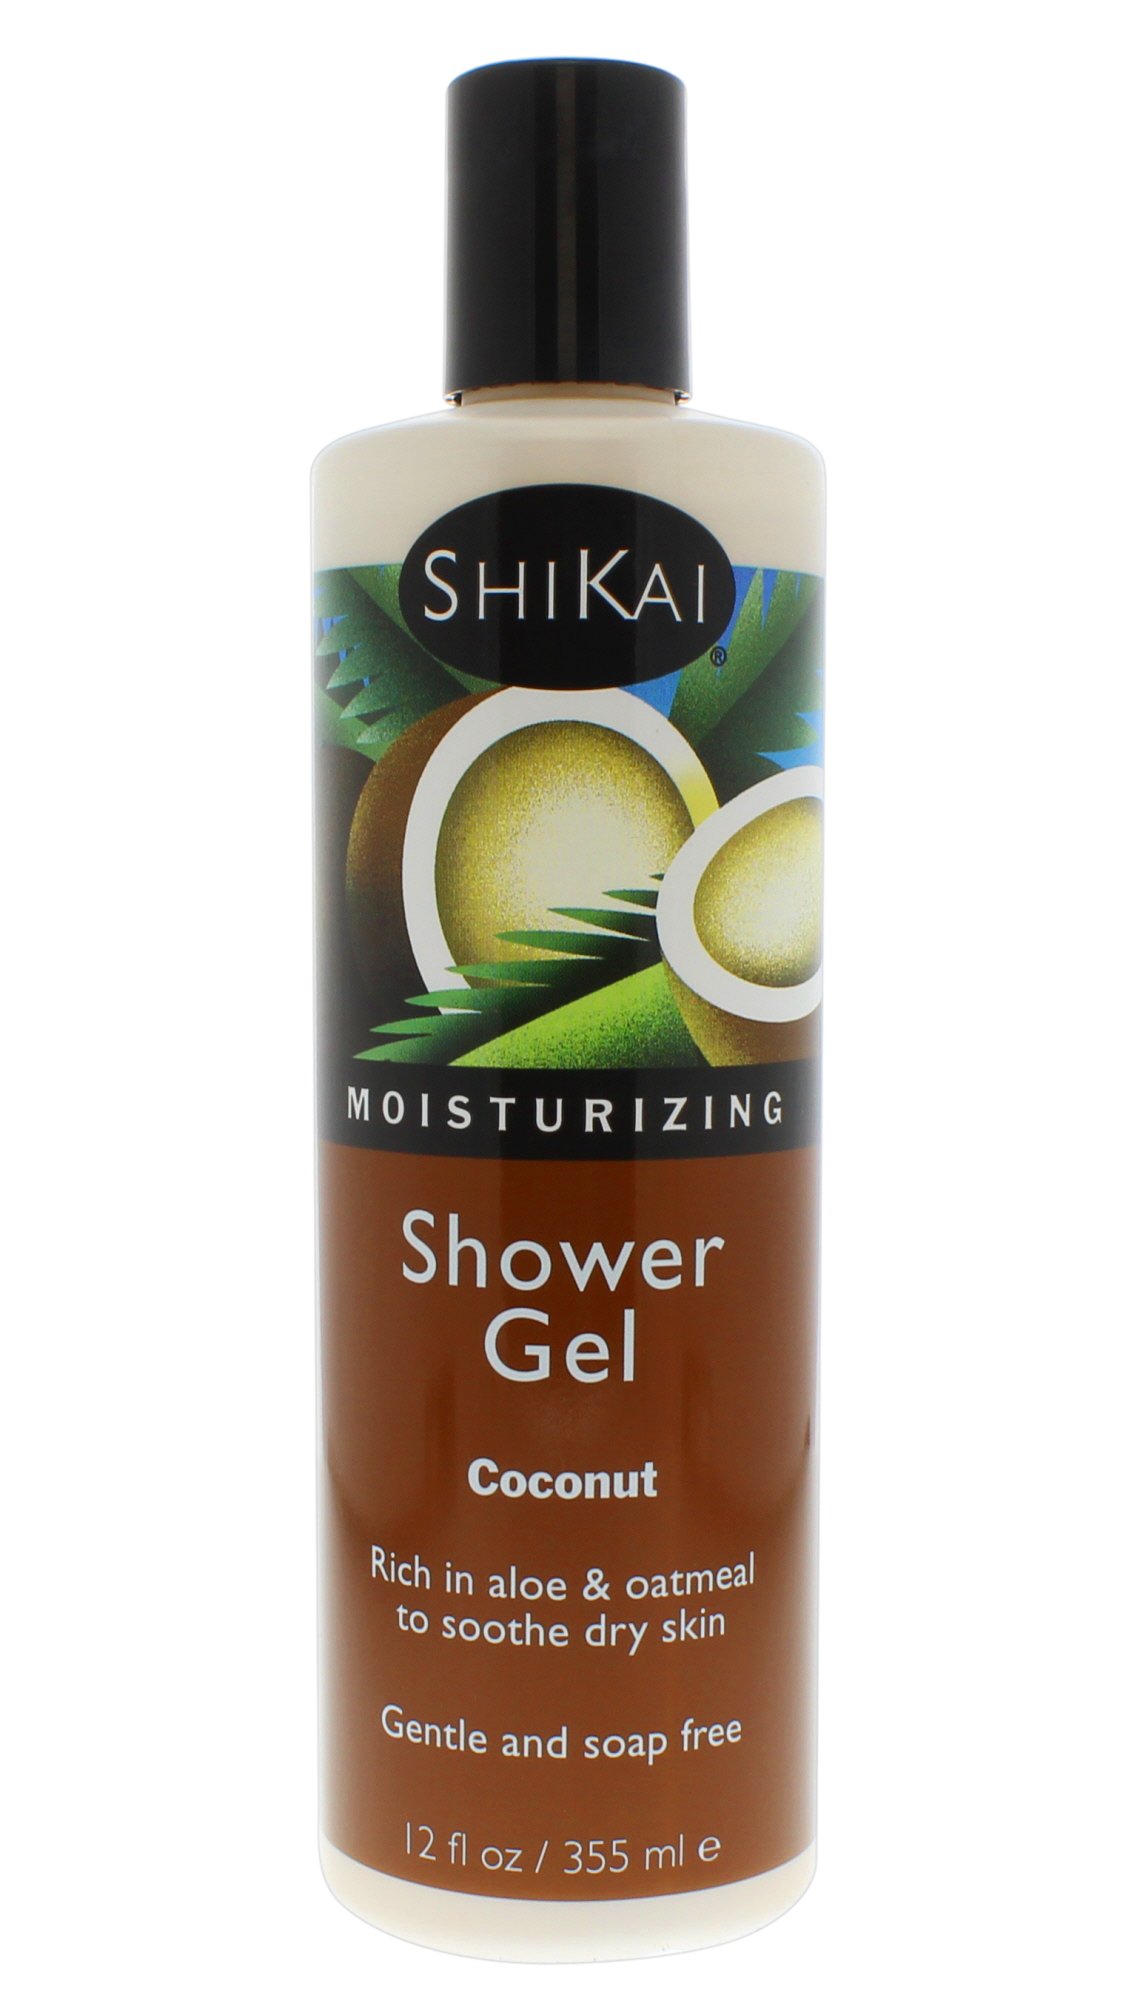 ShiKai - Daily Moisturizing Shower Gel (Coconut, 12 oz) | Gentle Soap-free Formula | With Aloe Vera & Oatmeal for Soft, Healthy Skin | Dry Skin Relief